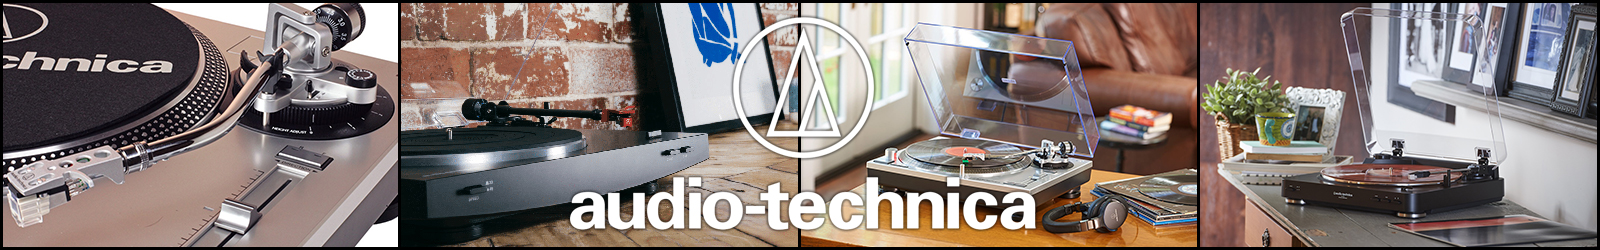 Audio Technica Banner